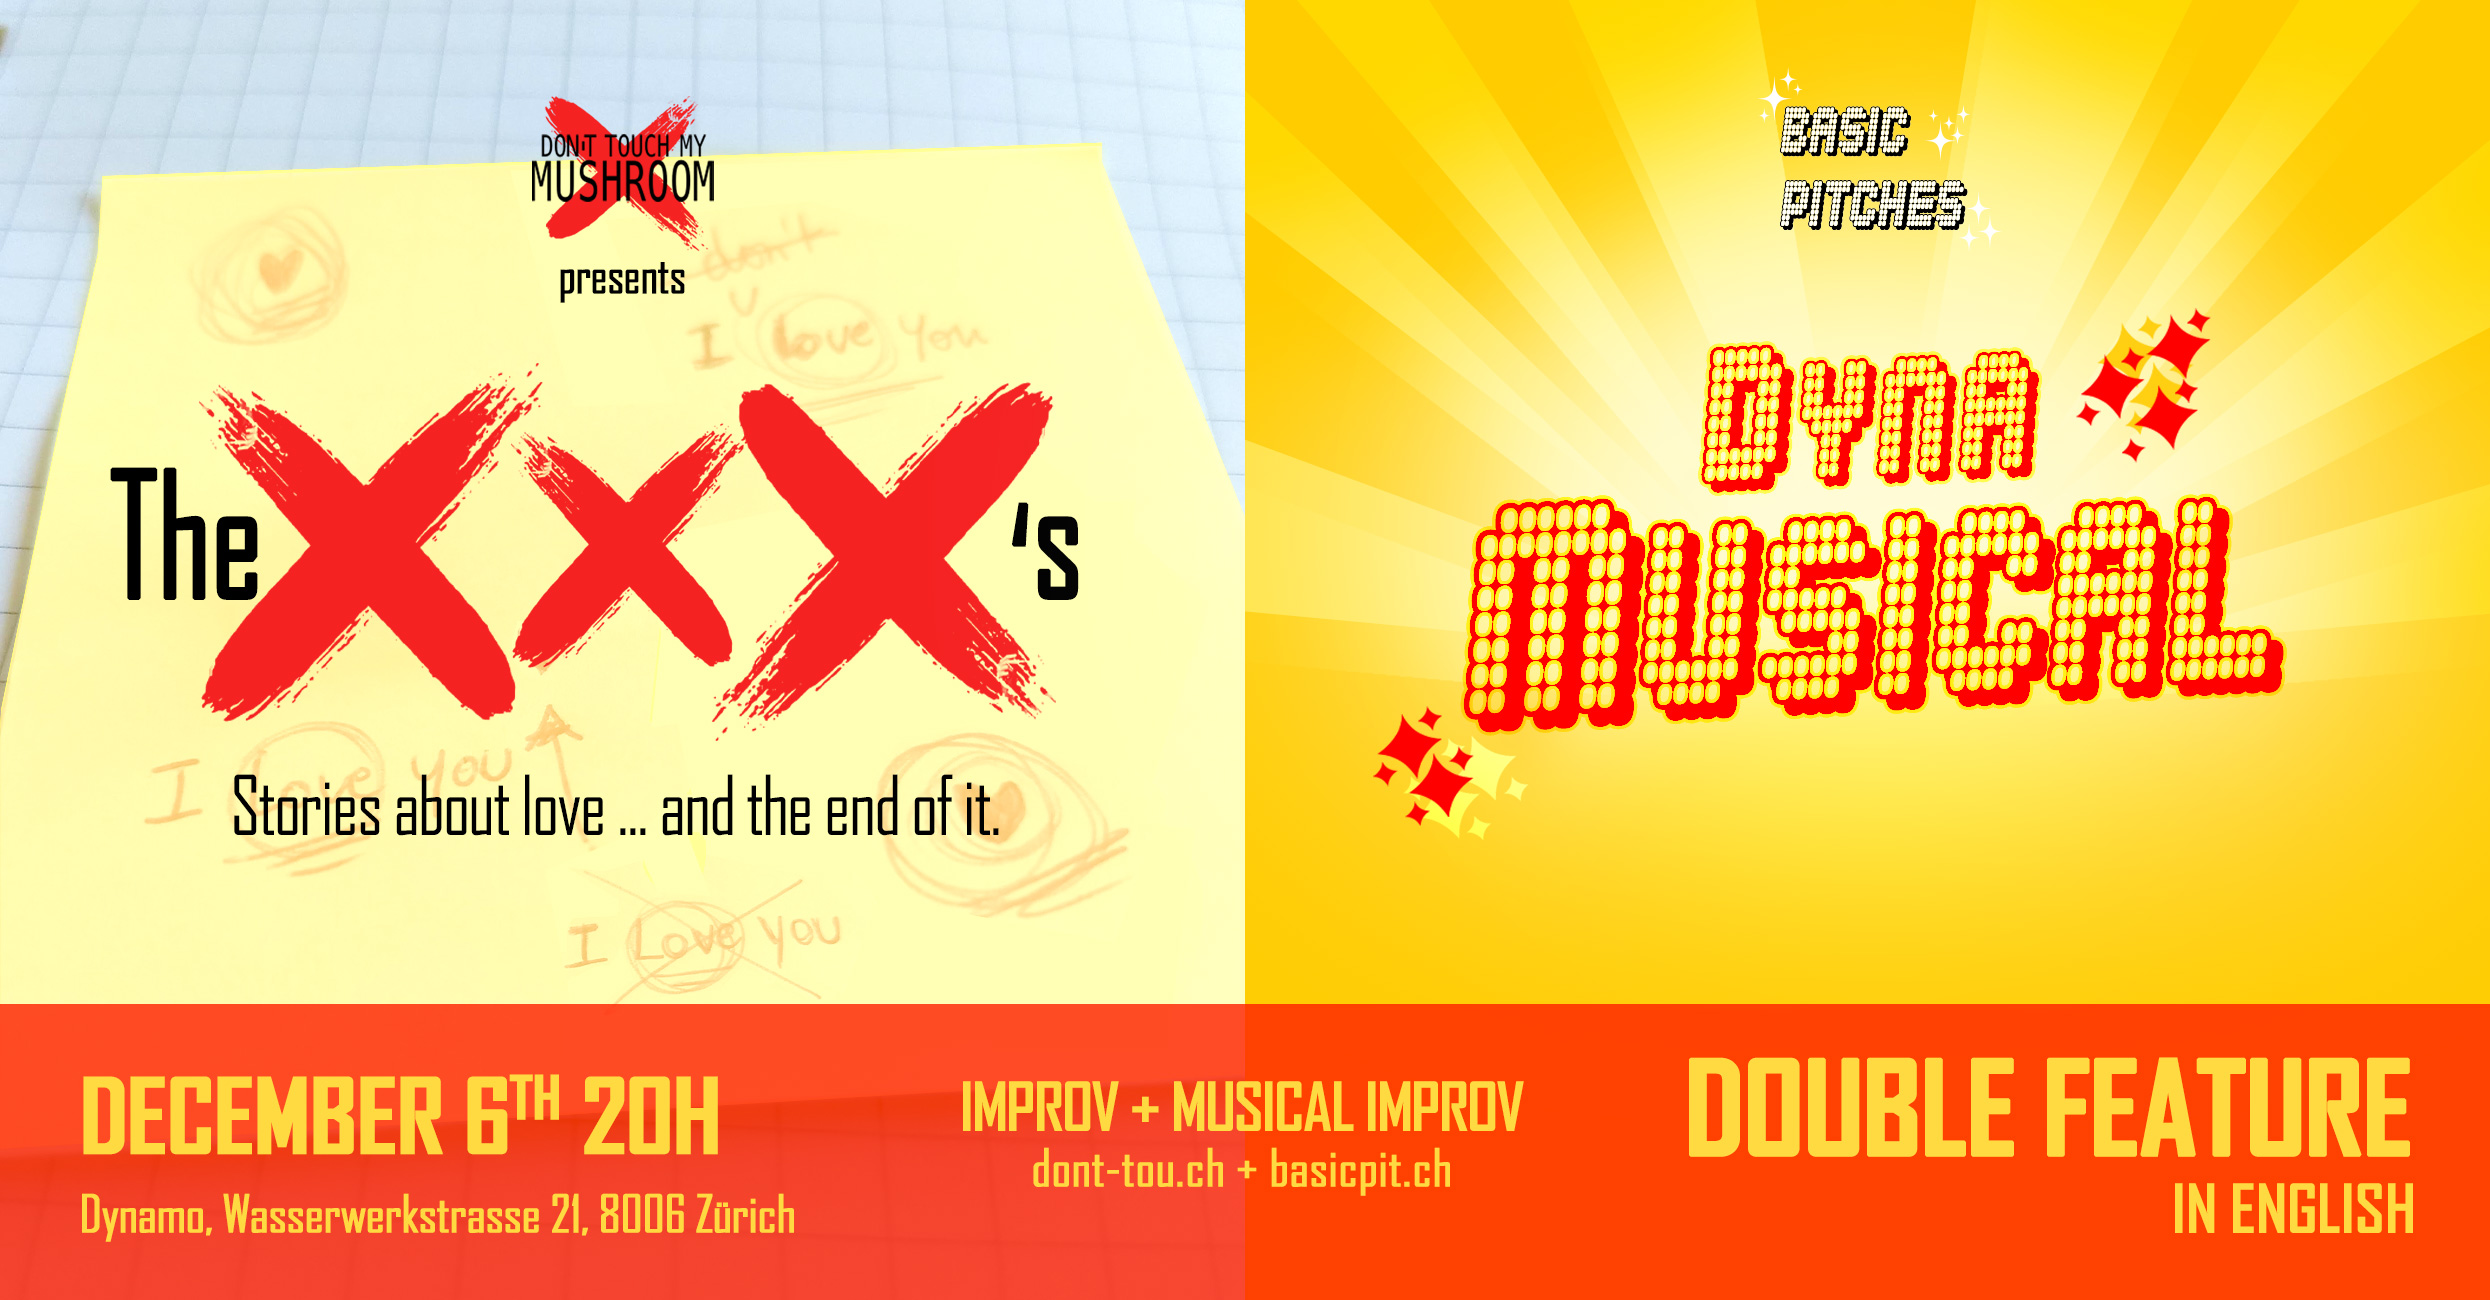 The XxX's + musical @ Dynamo image